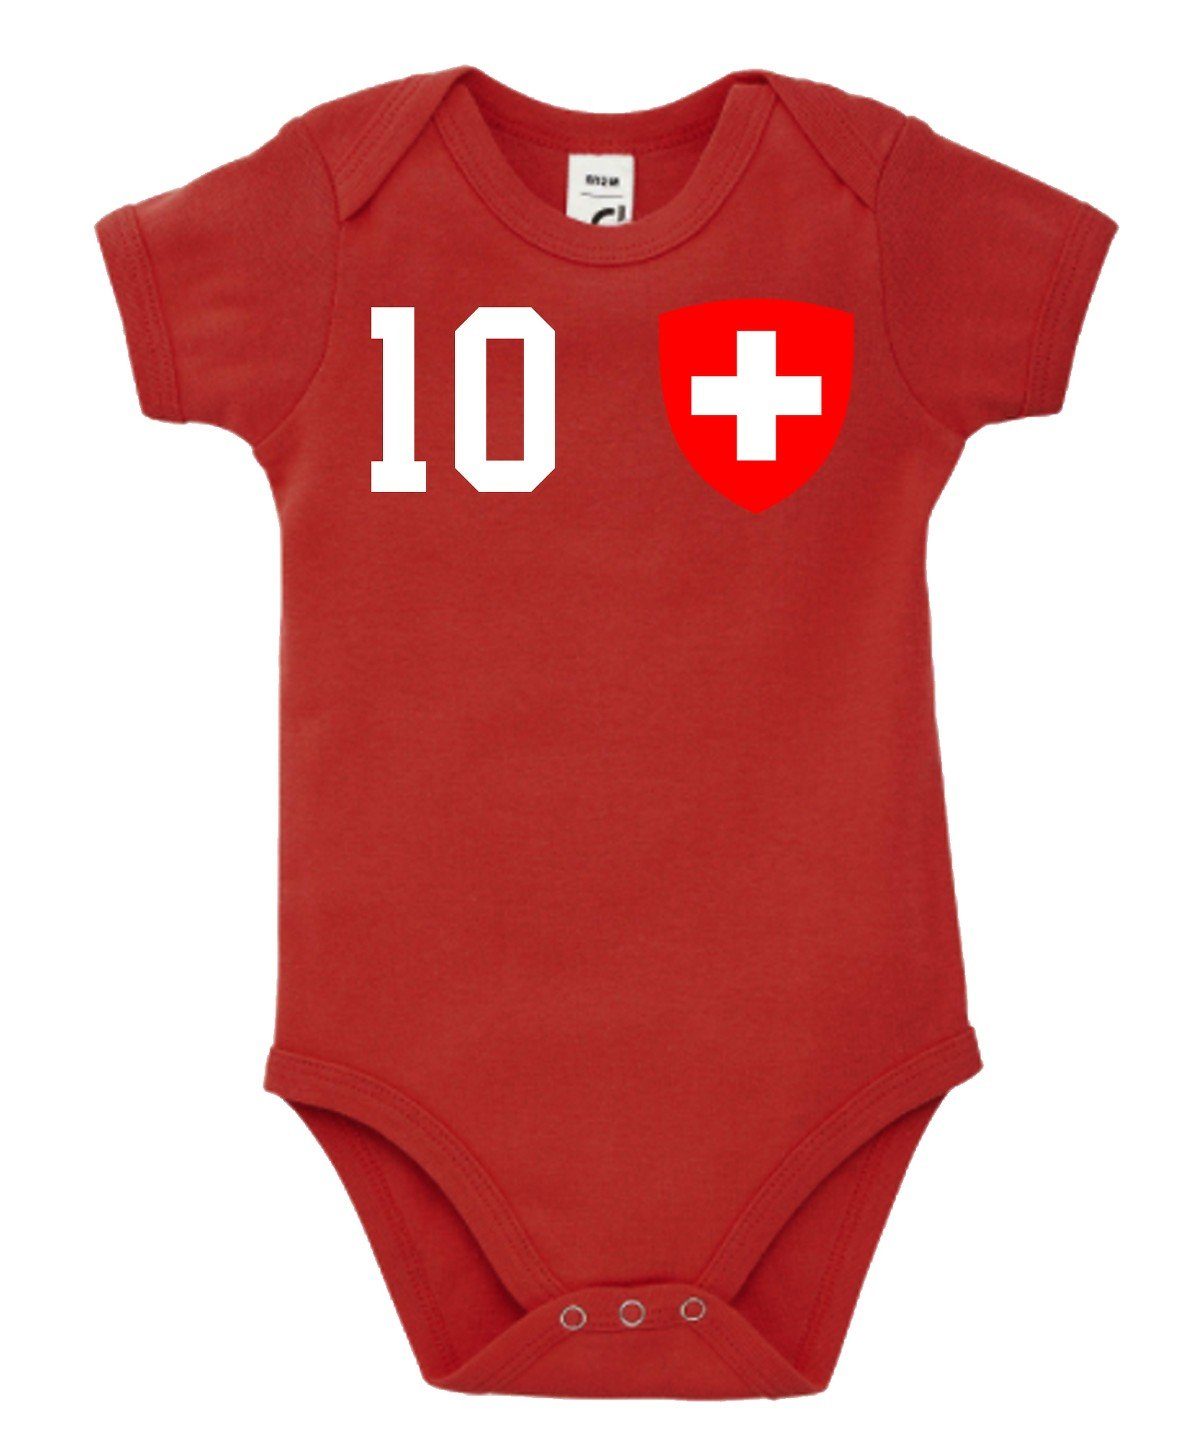 Kurzarmbody Youth Kinder Body Designz Strampler Motiv Schweiz mit trendigem Rot Baby